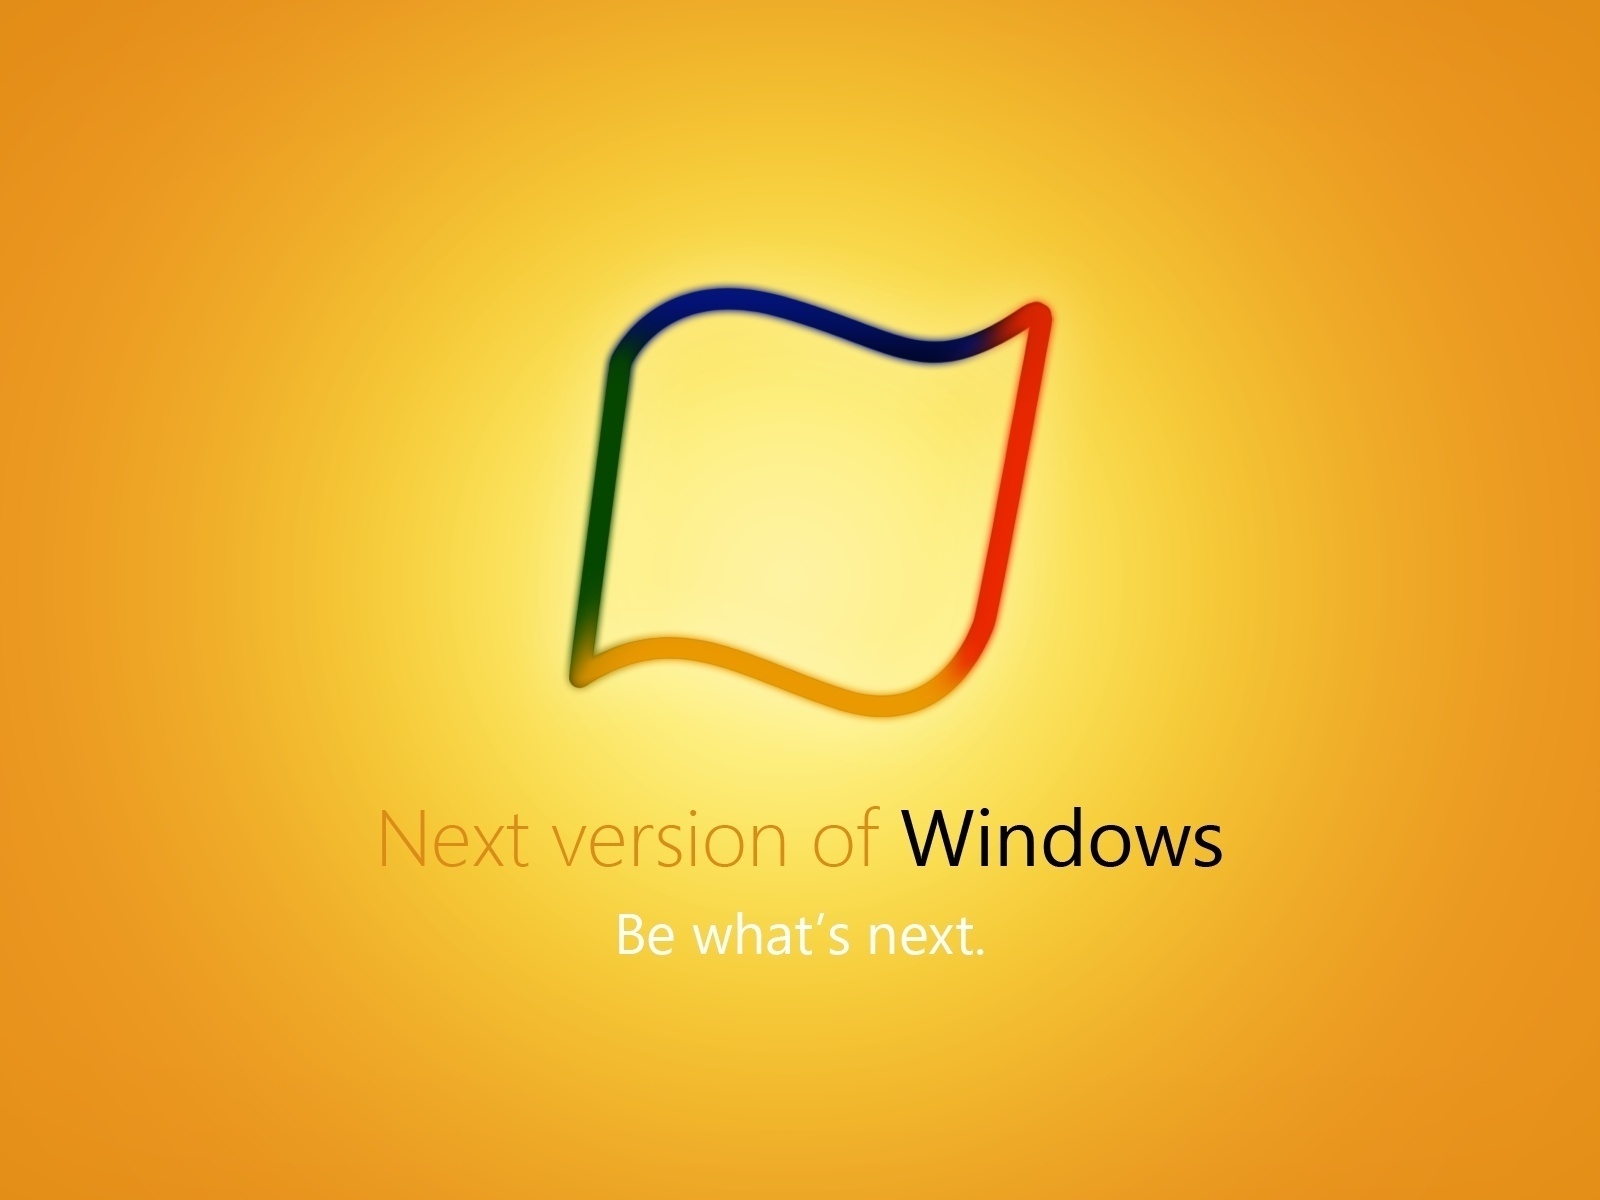 Next Windows 8 for 1600 x 1200 resolution